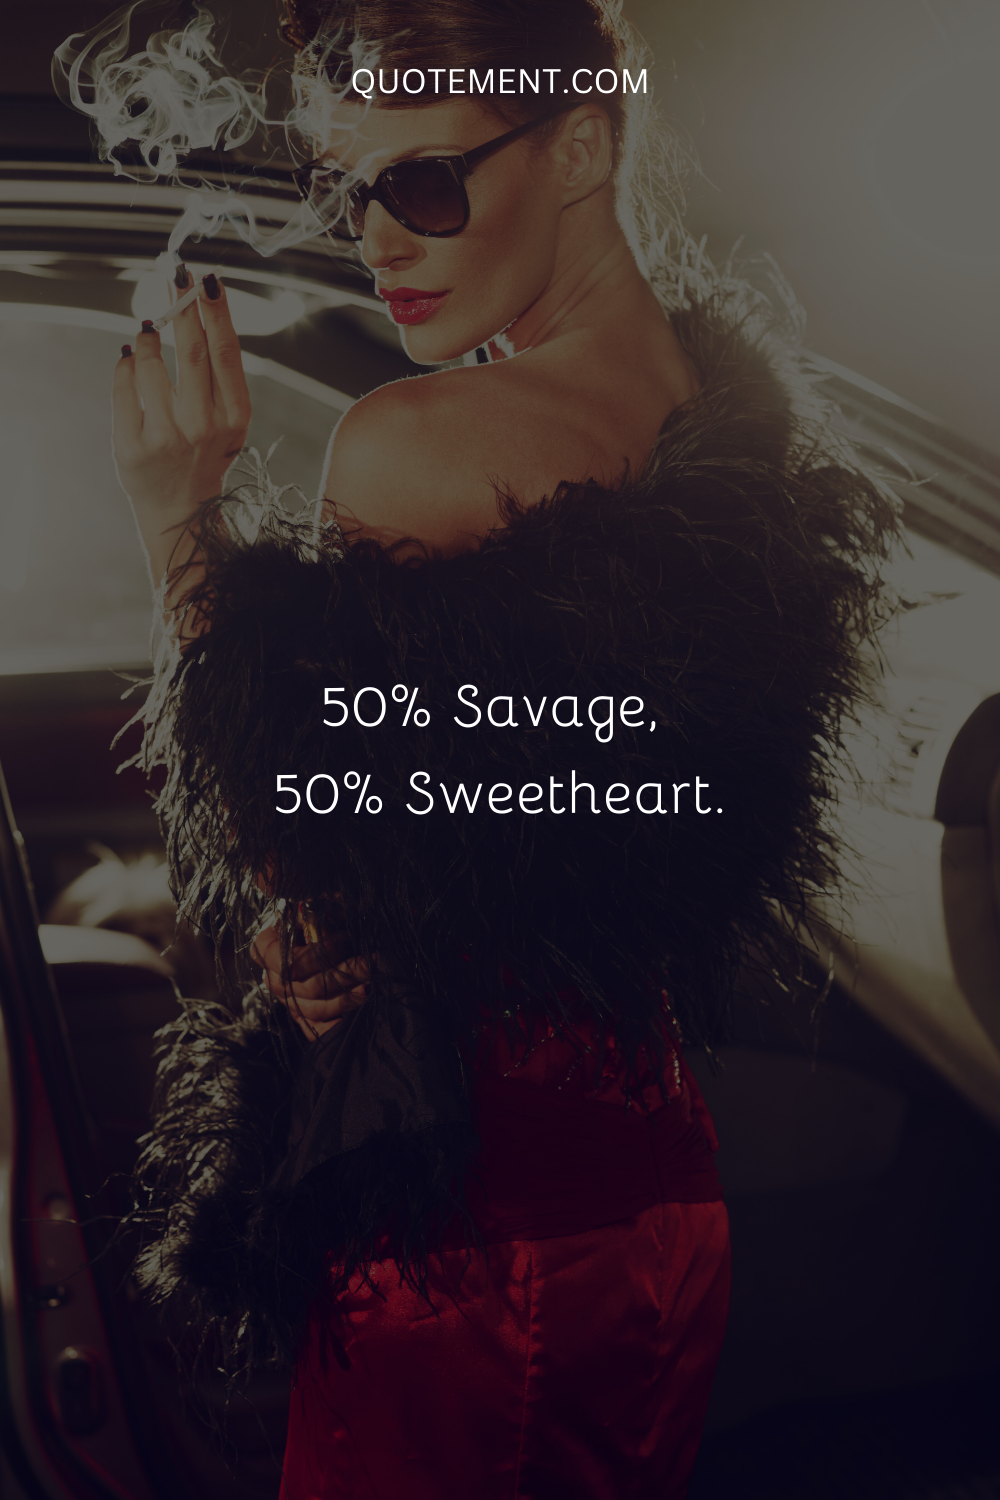 50% Savage, 50% Sweetheart.